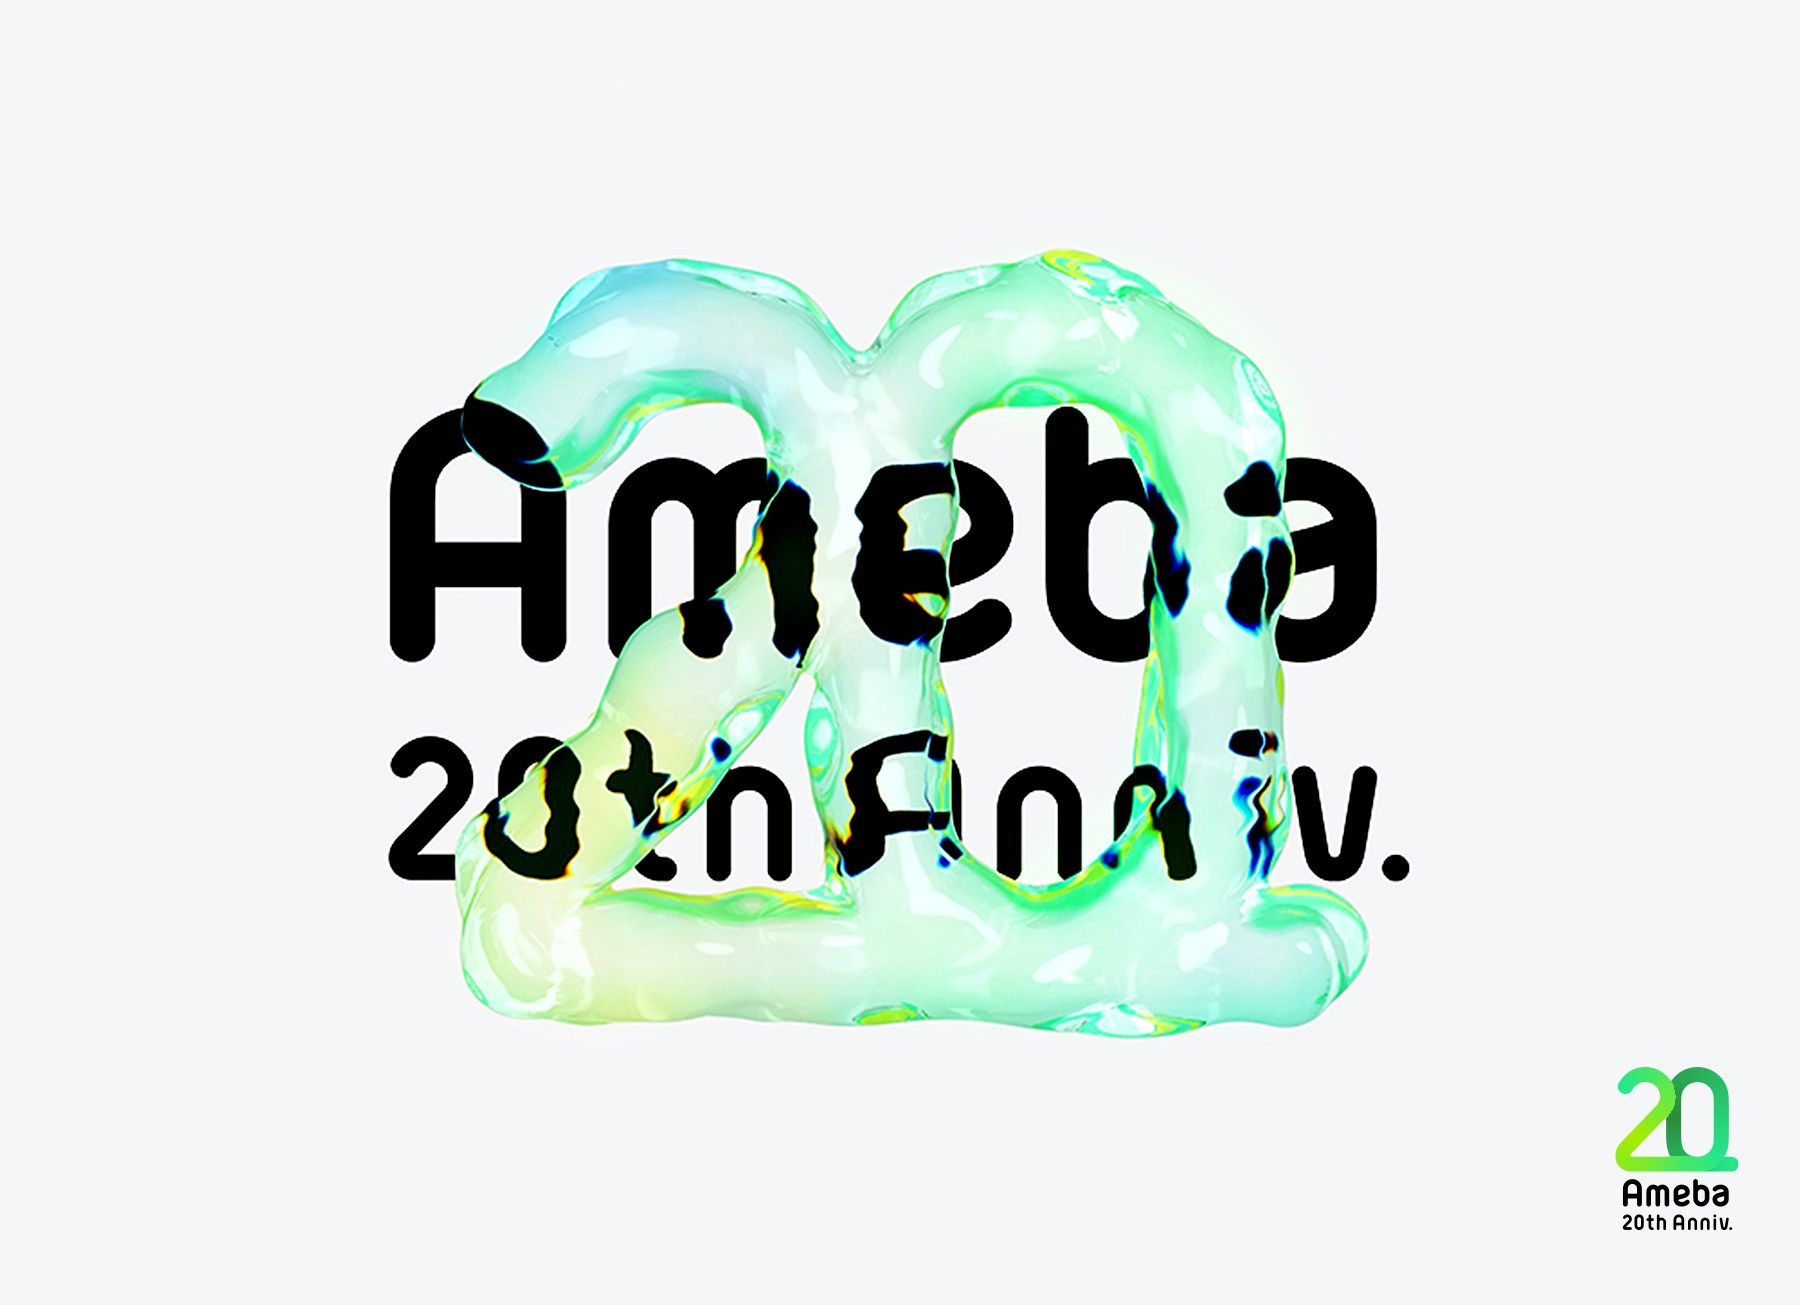  Ameba20周年特設サイト デザインの背景に込めた想い